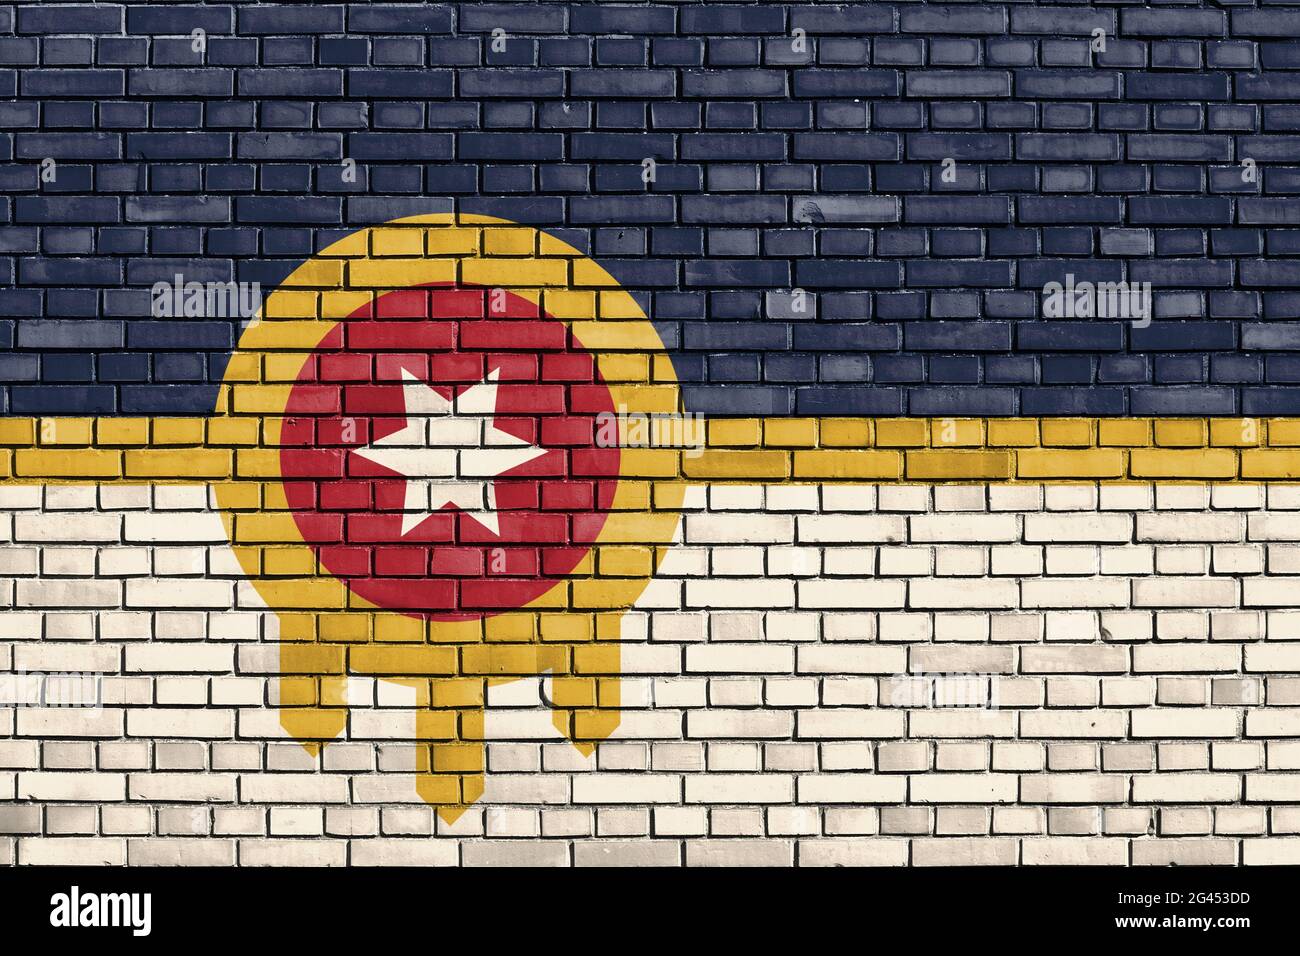 Flag of Tulsa, Oklahoma painted on brick wall Stock Photo